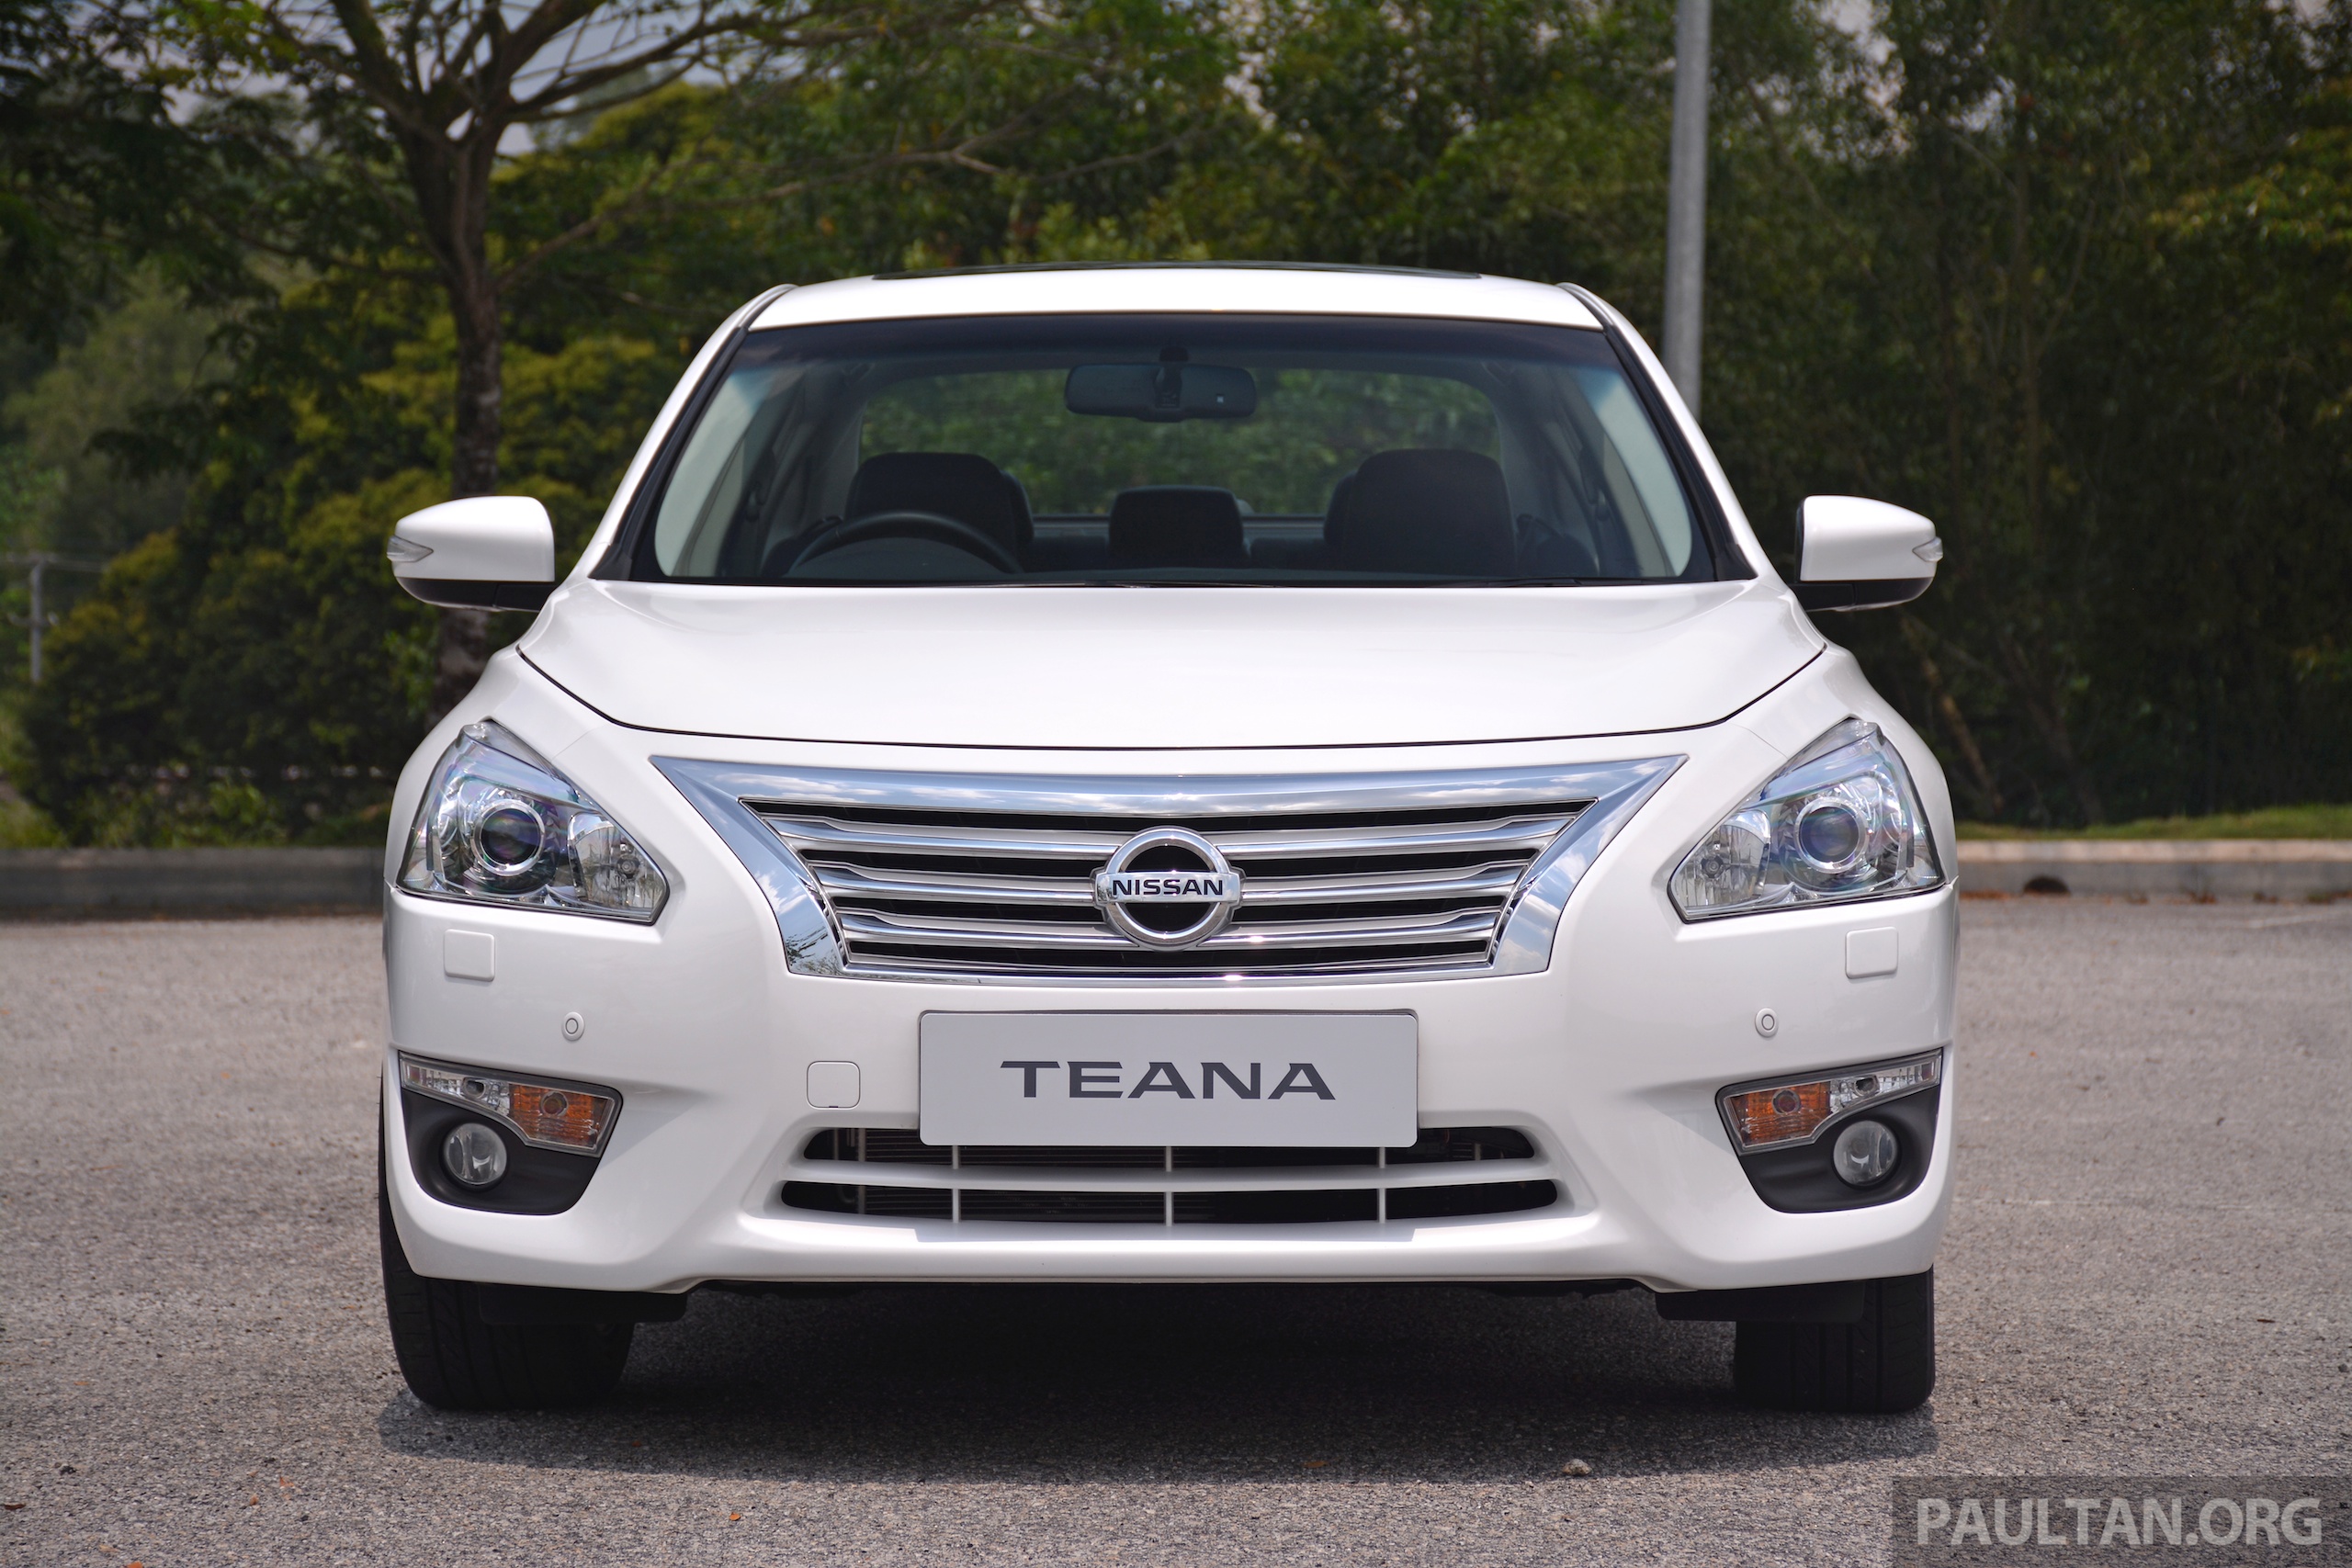 L 33 3. Nissan Teana l33. Ниссан Теана 33. Nissan Teana l33 2014. Nissan Teana 33 кузов.